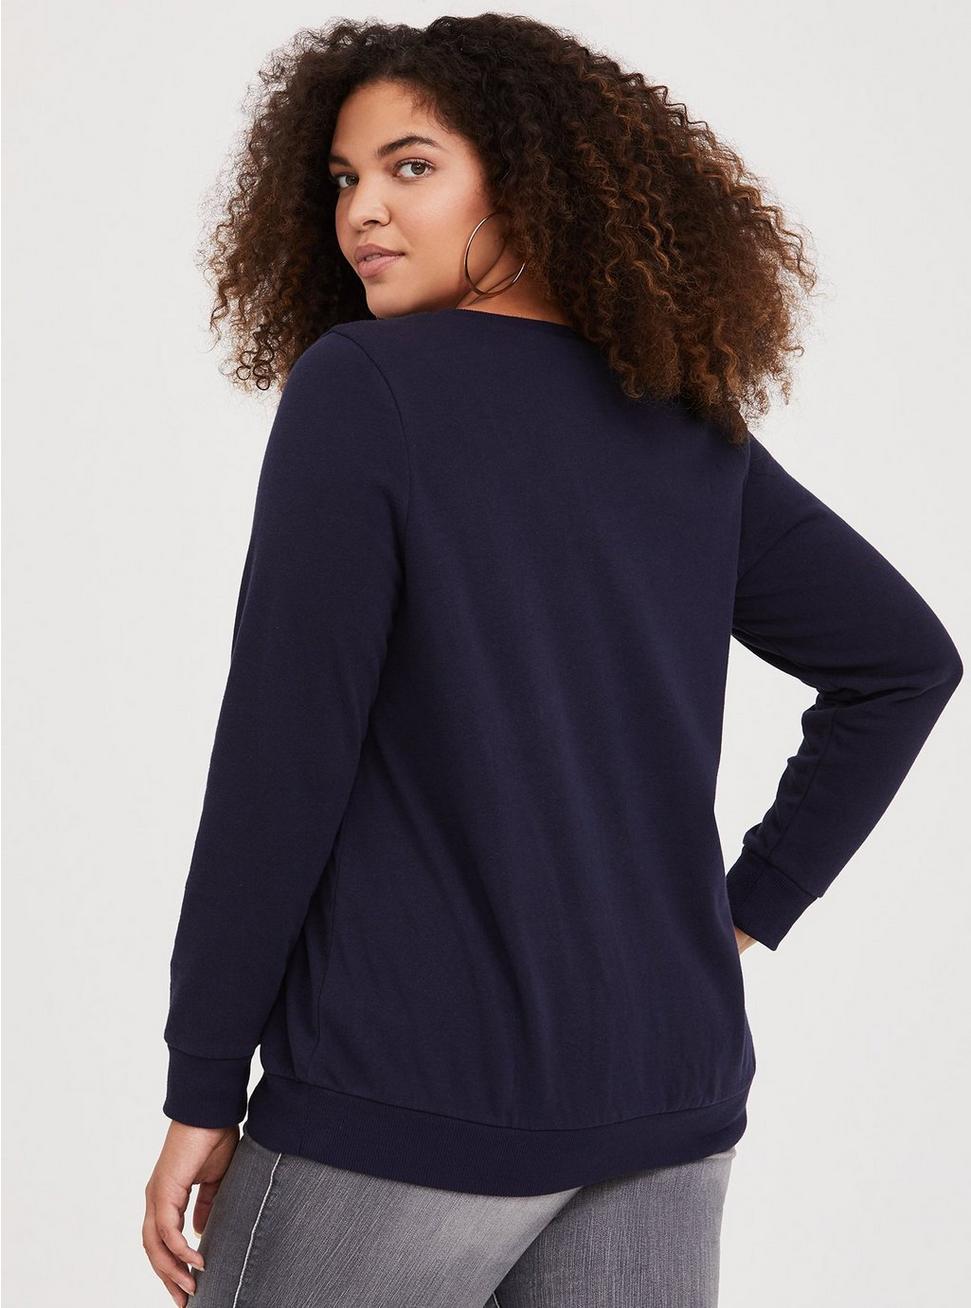 Plus Size - Navy Floral Embroidered Sweatshirt - Torrid